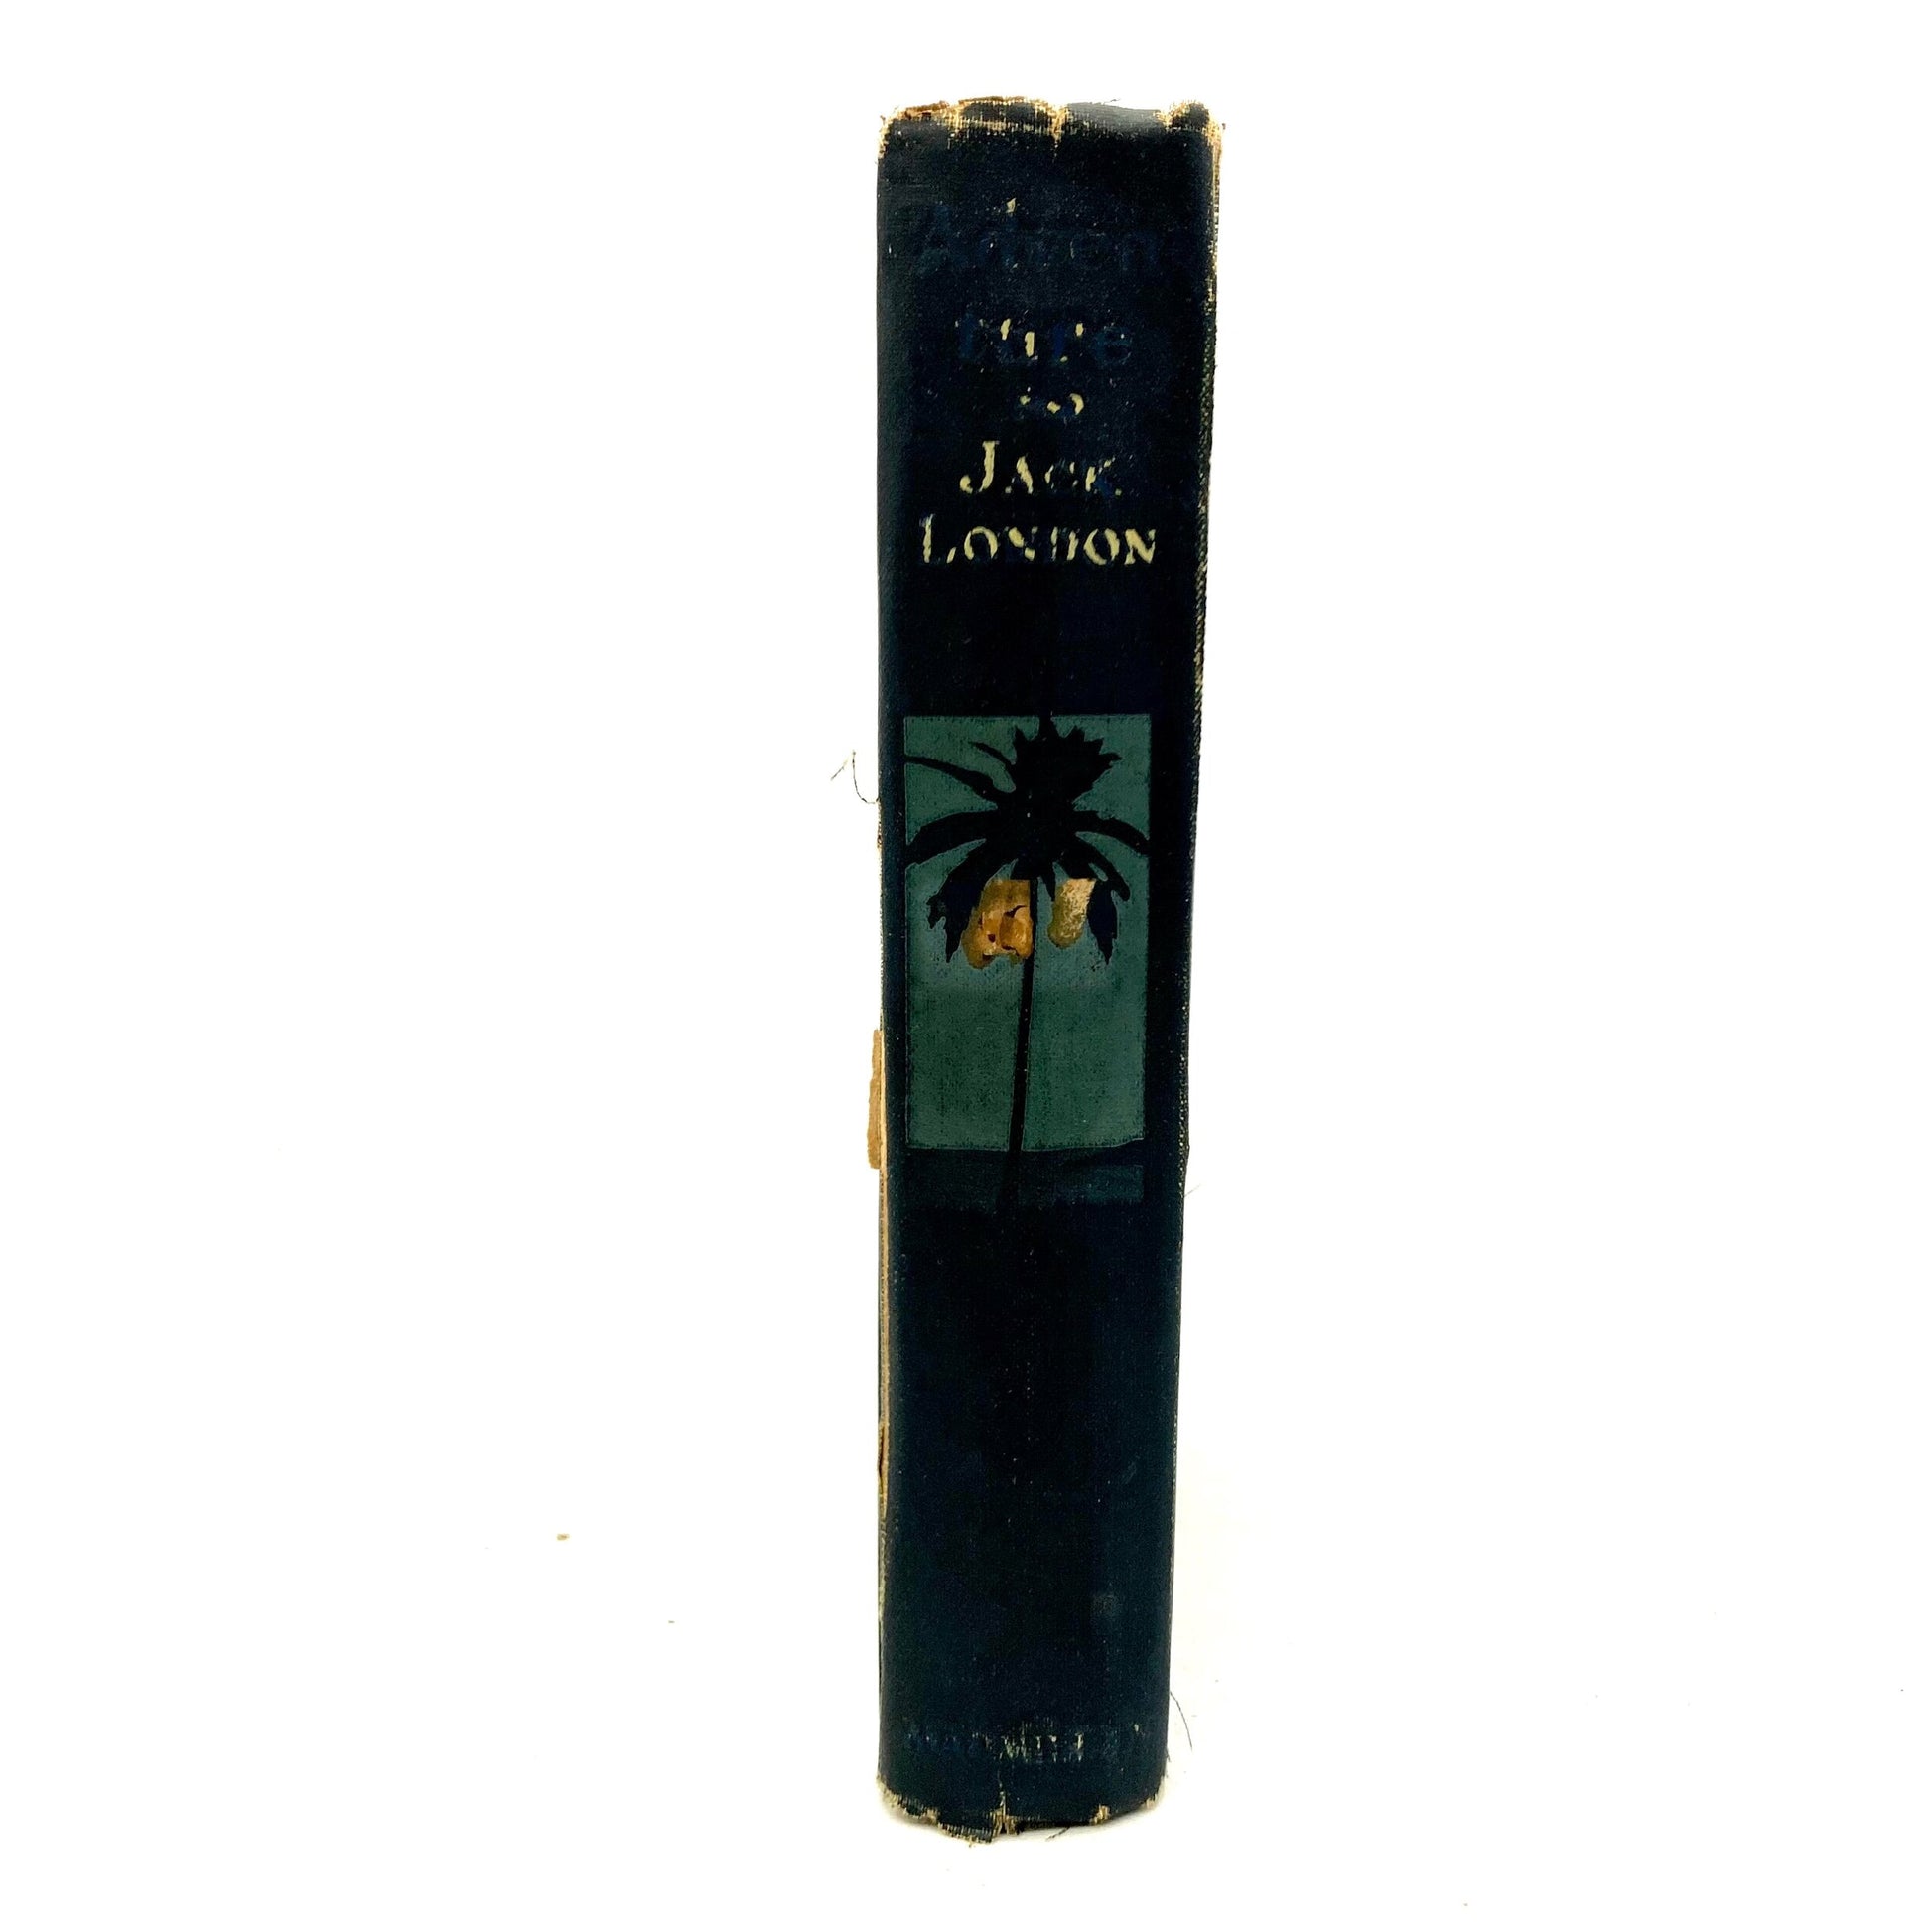 LONDON, Jack "Adventure" [Macmillan, 1911] 1st Edition - Buzz Bookstore